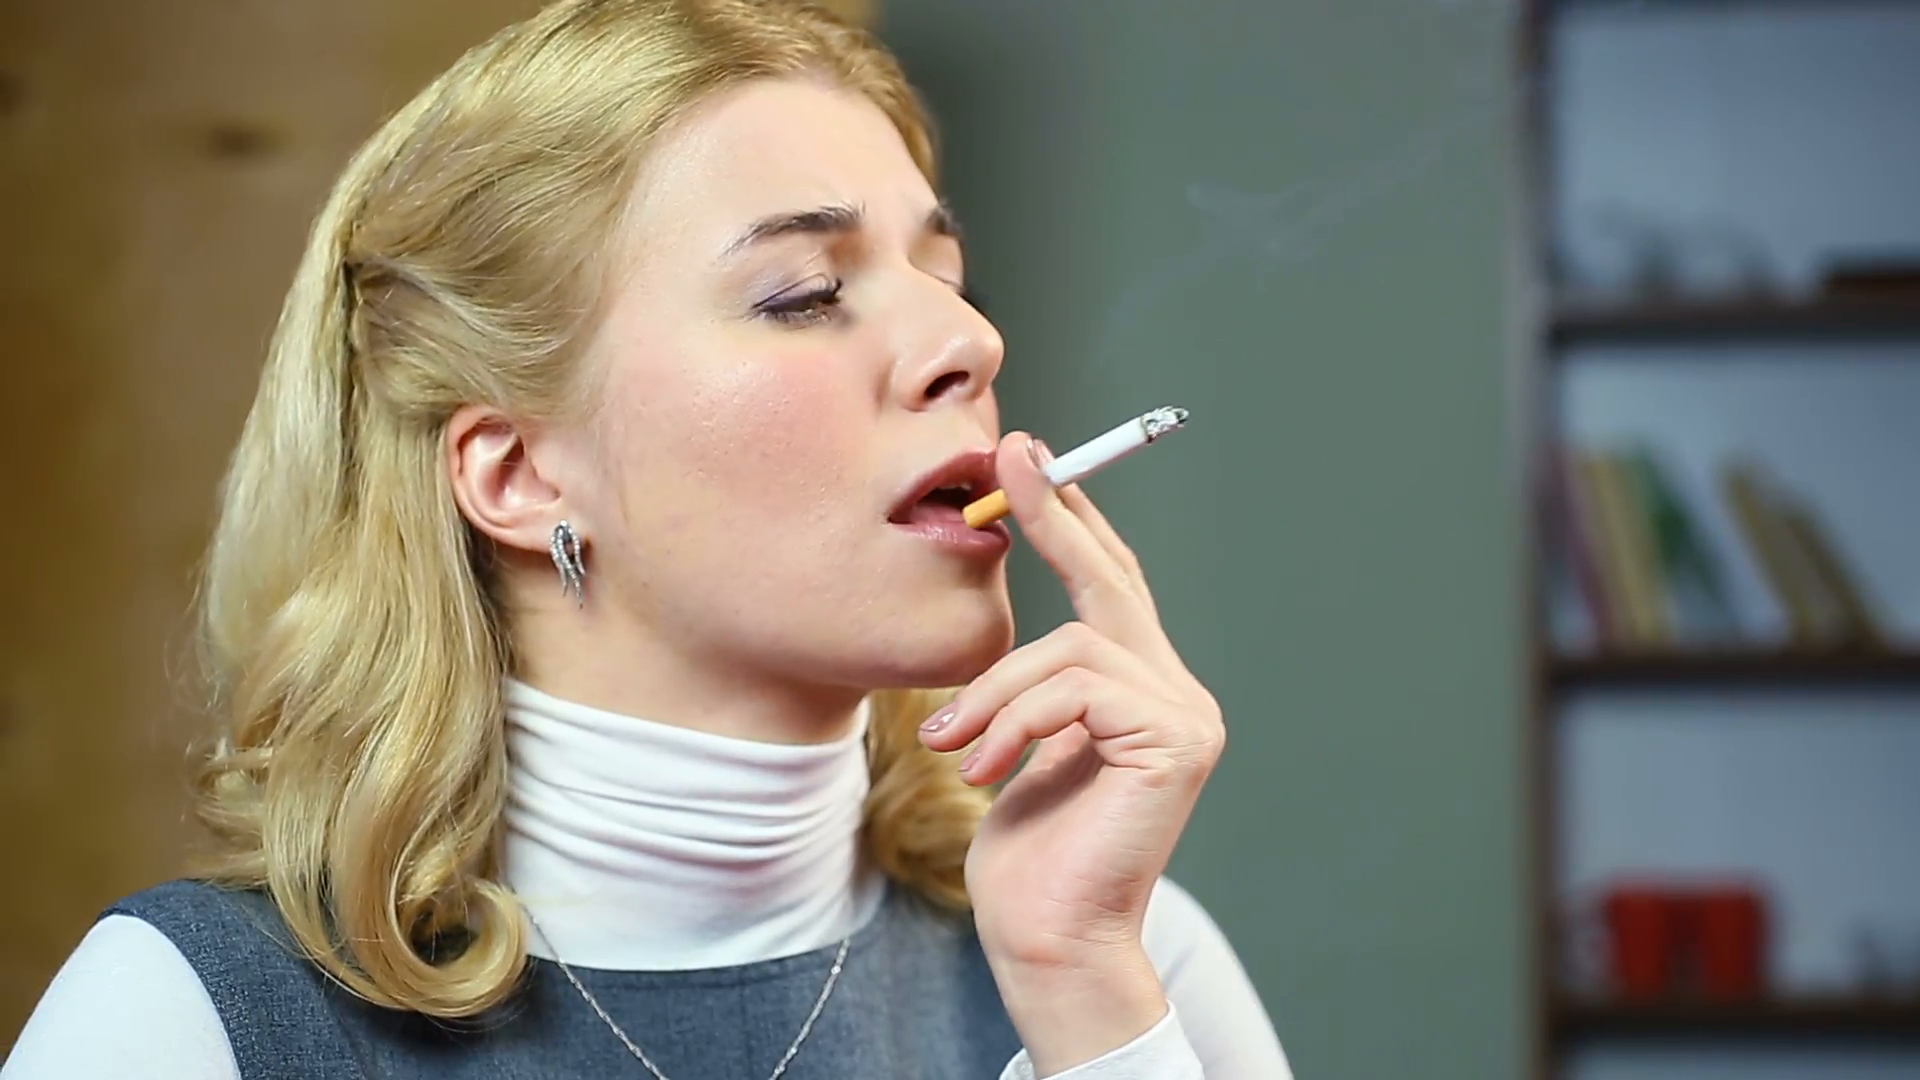 Woman Smoking Cigarette Ad